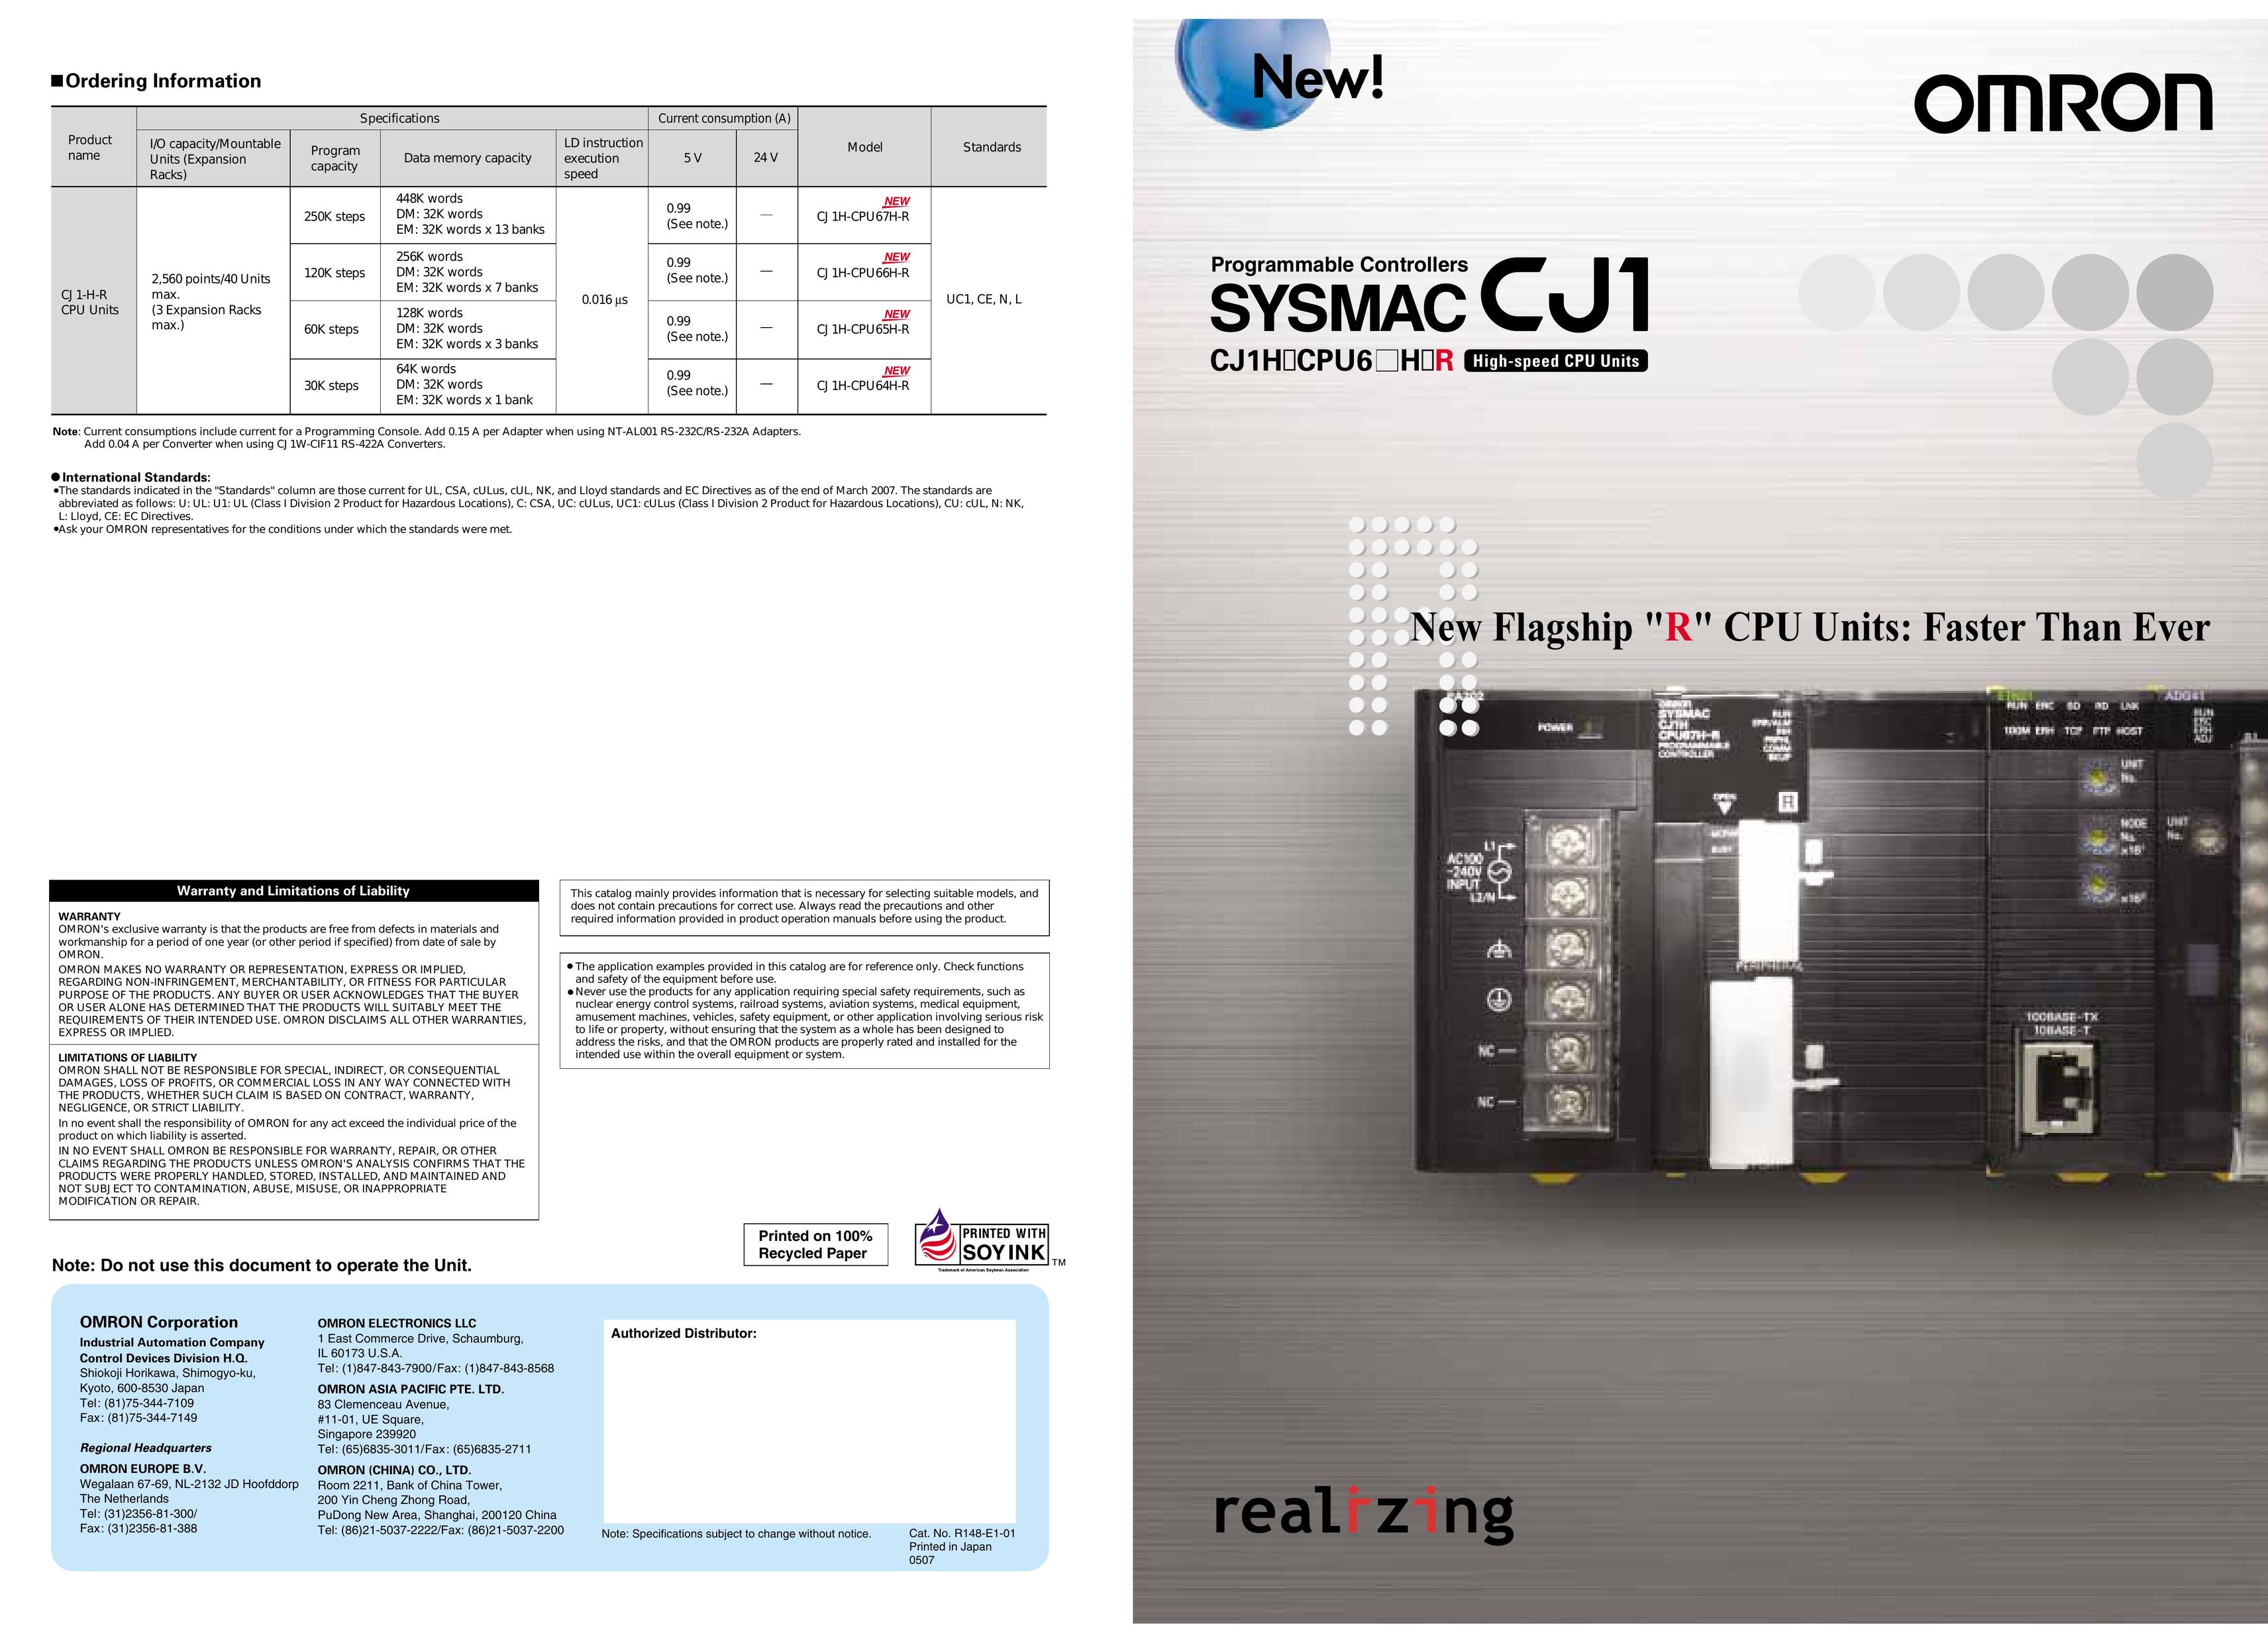 Omron CJ1H Computer Hardware User Manual